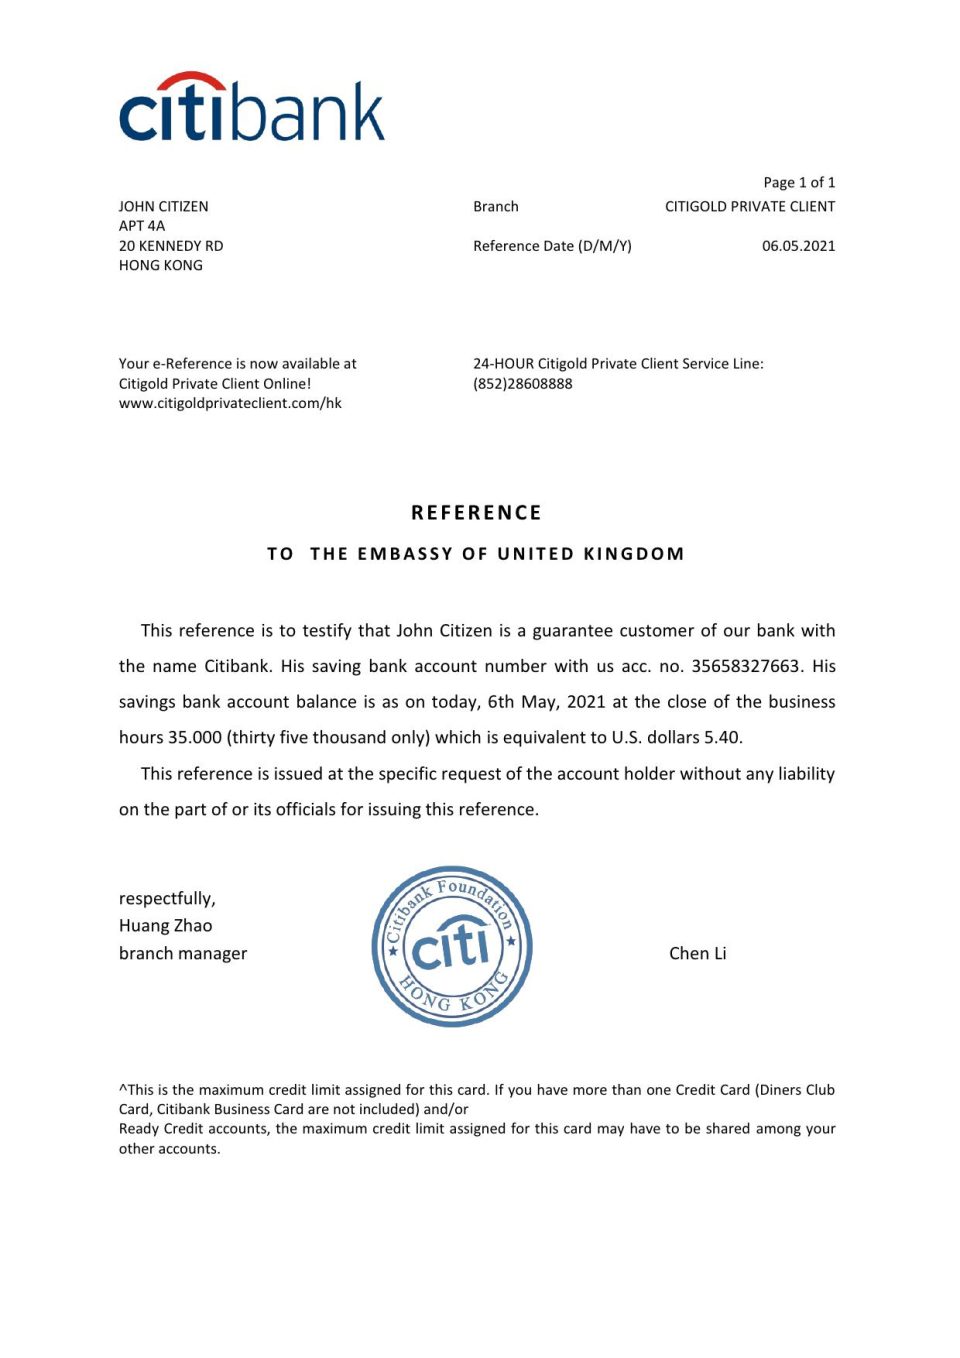 Download Hong Kong Citibank Bank Reference Letter Templates | Editable Word